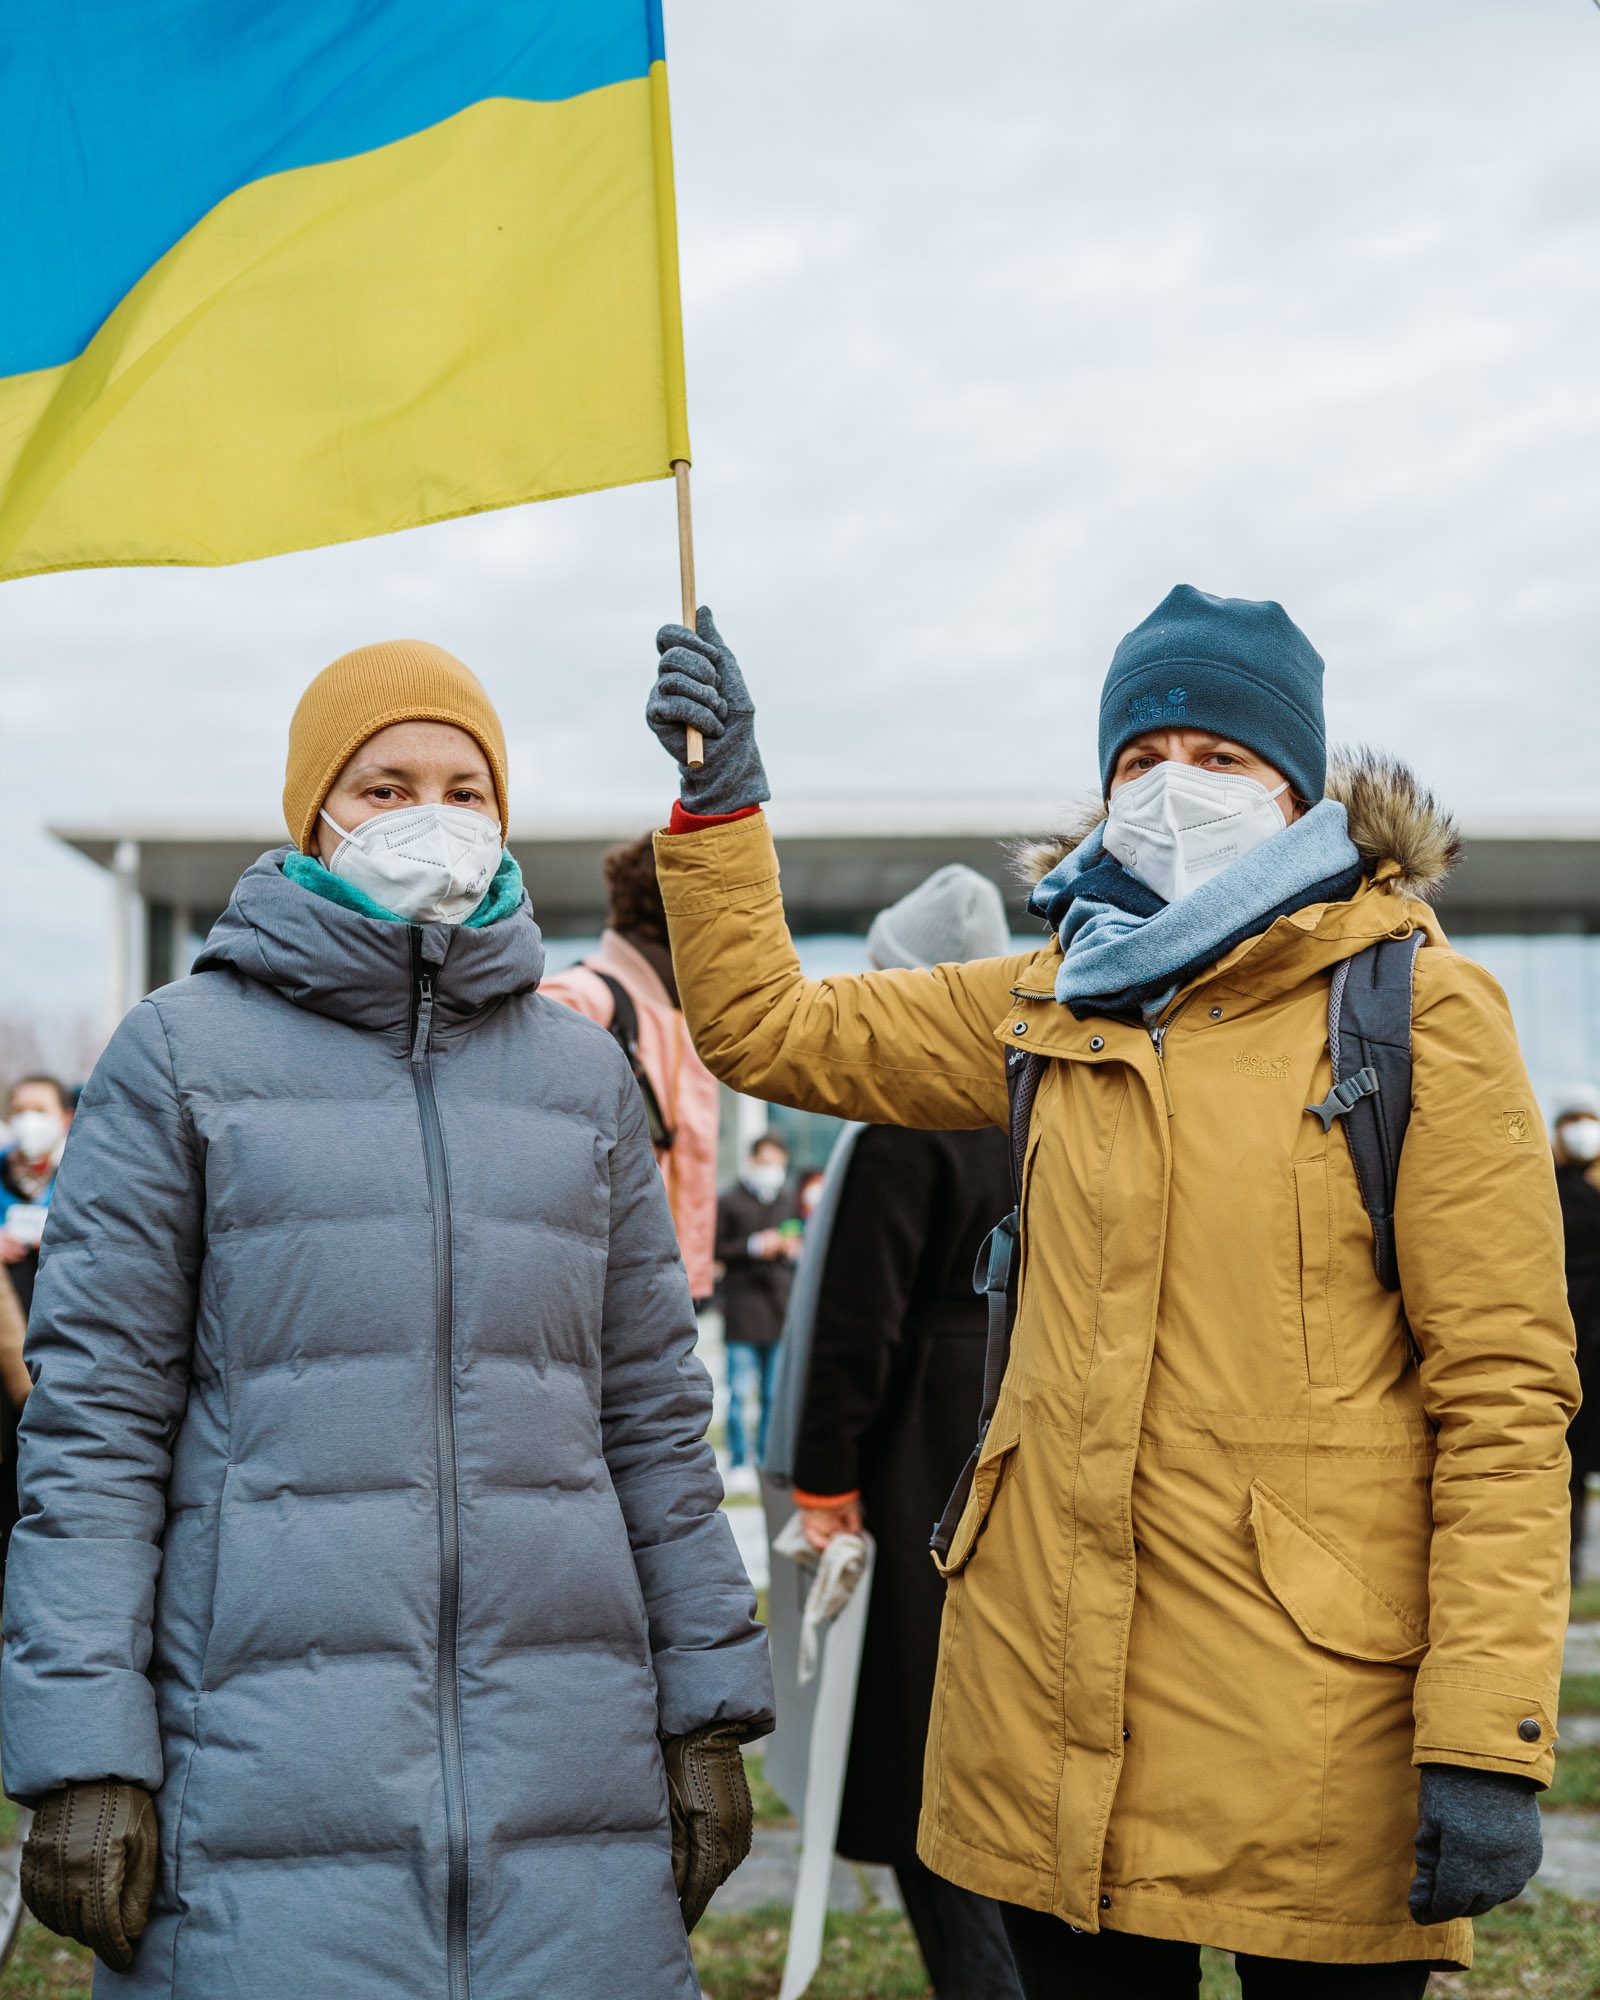 Demonstration gegen den Krieg in der Ukraine in Berlin. Foto: Tilman Vogler